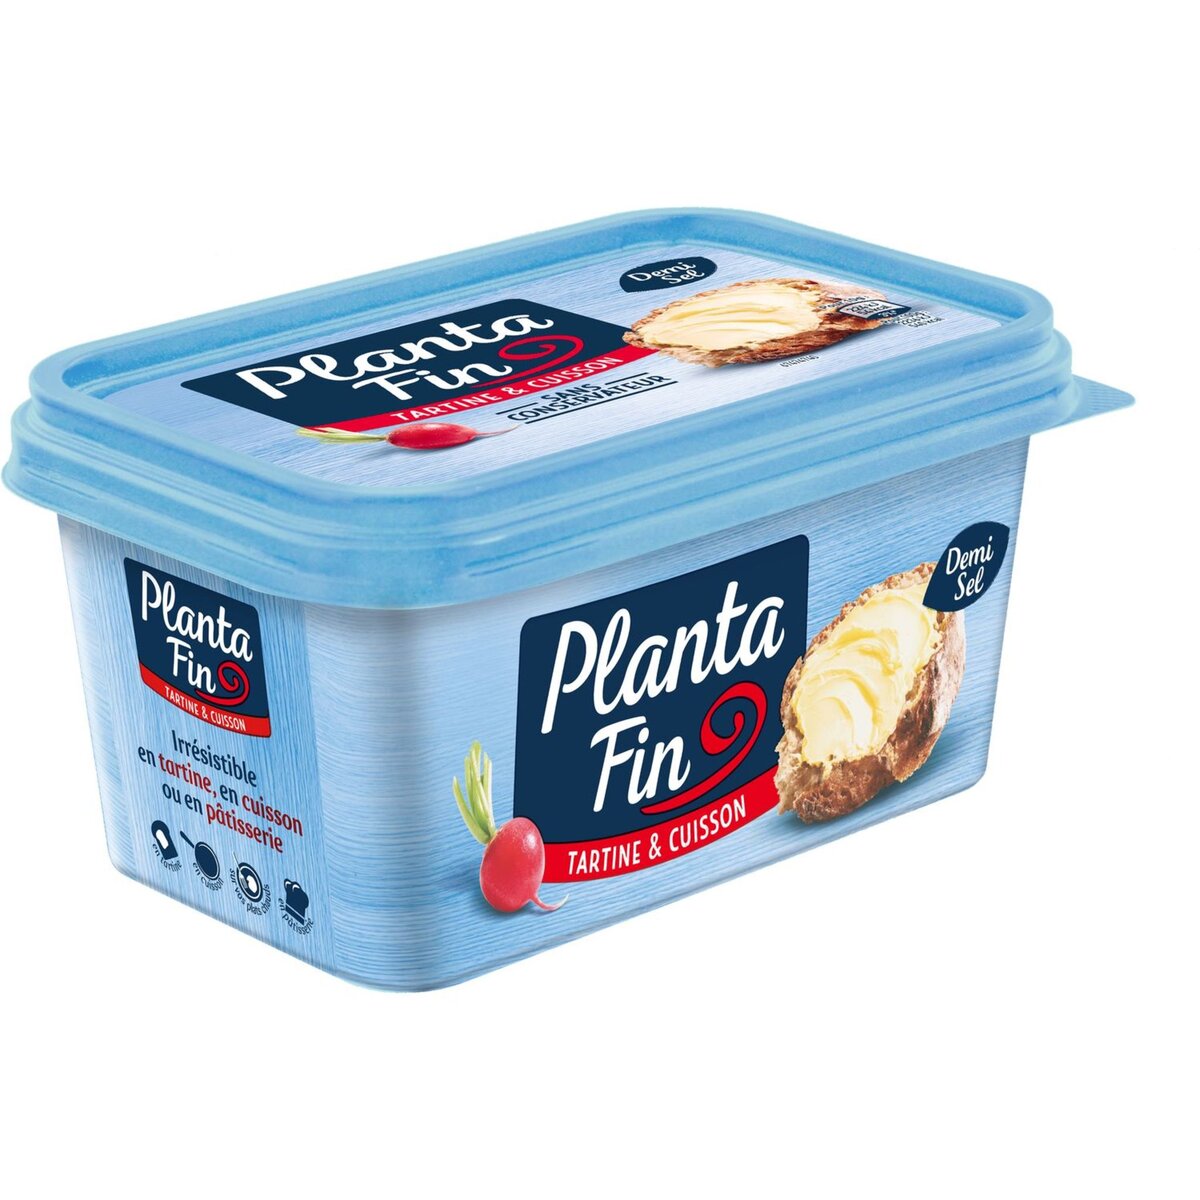 PLANTA FIN Planta fin margarine tartine & cuisson demi-sel 510g